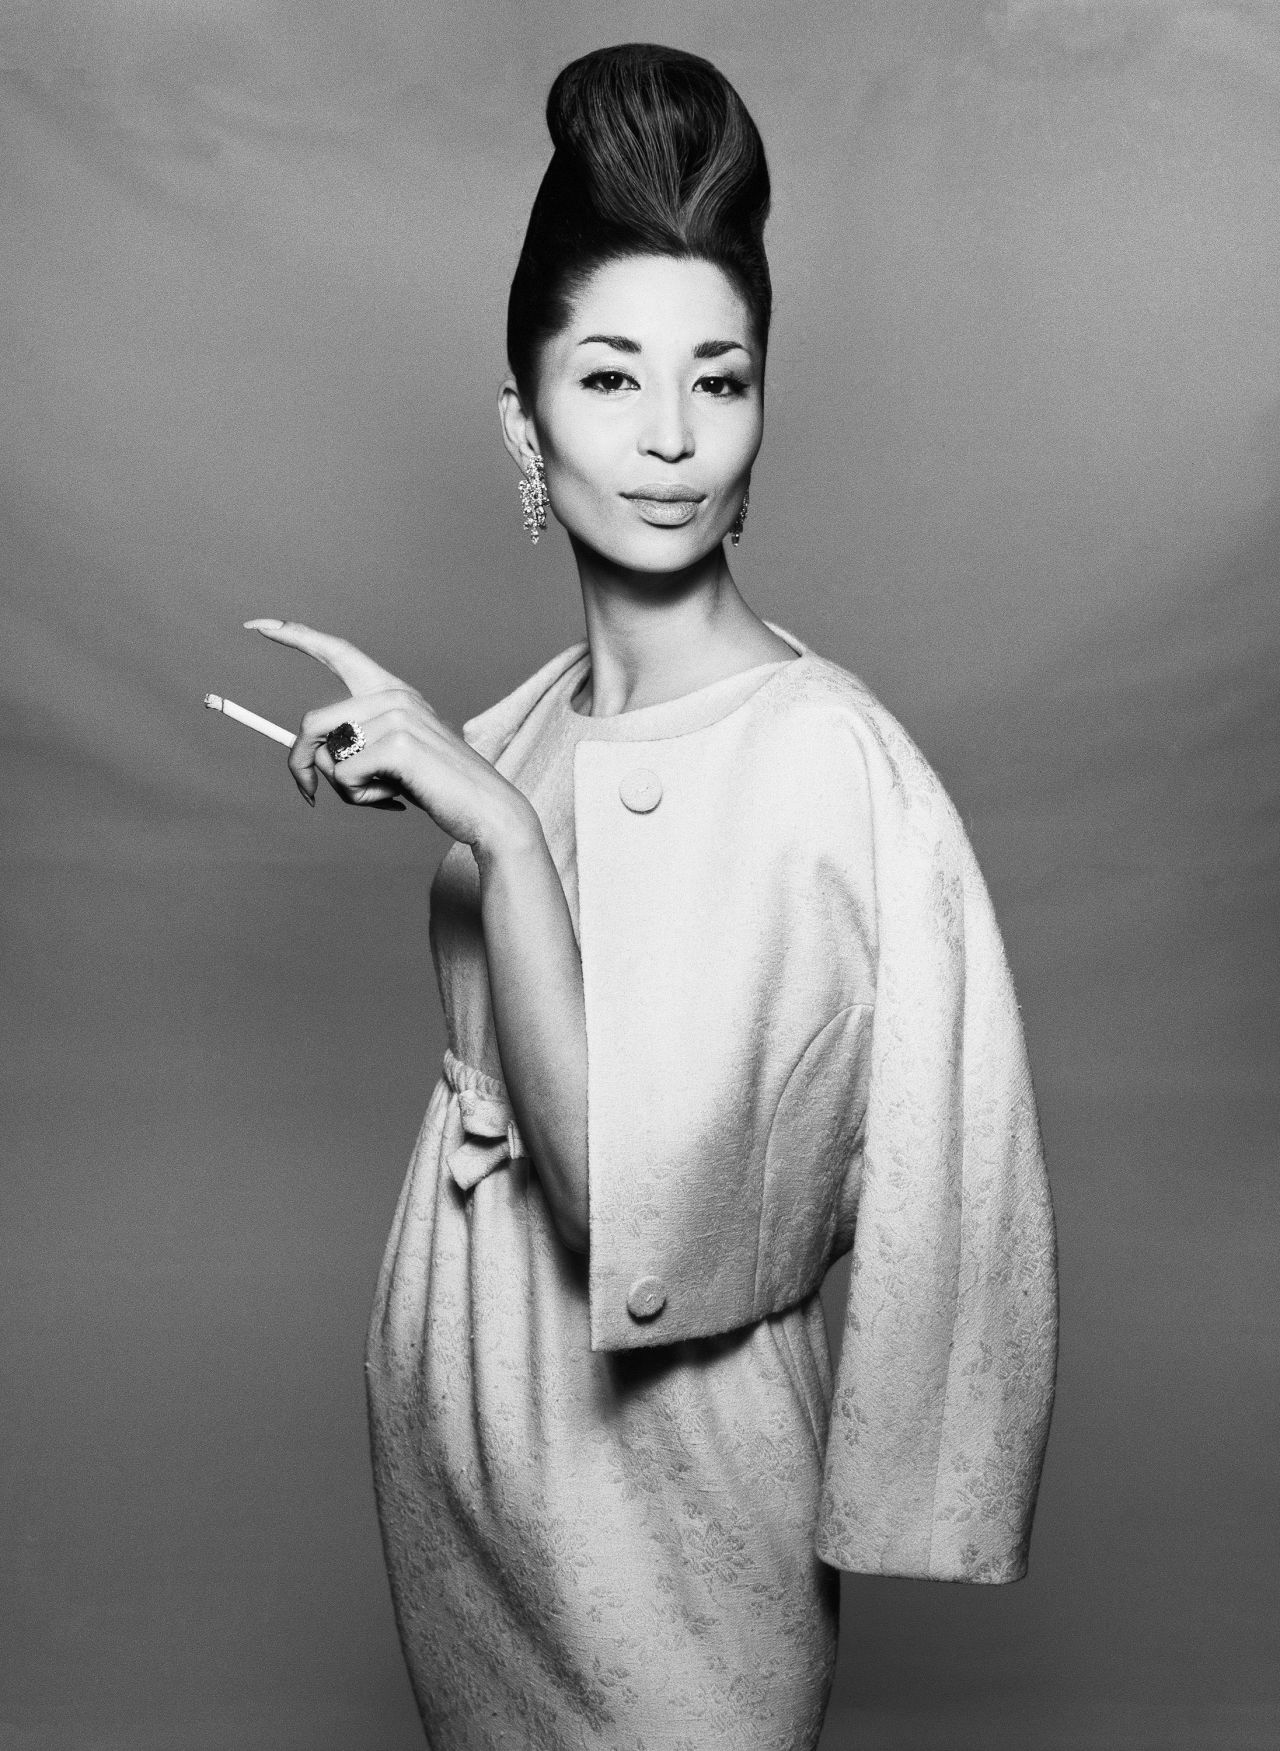 Filmmaker Sofia Coppola chose this iconic 1958 photograph of model China Machado. 